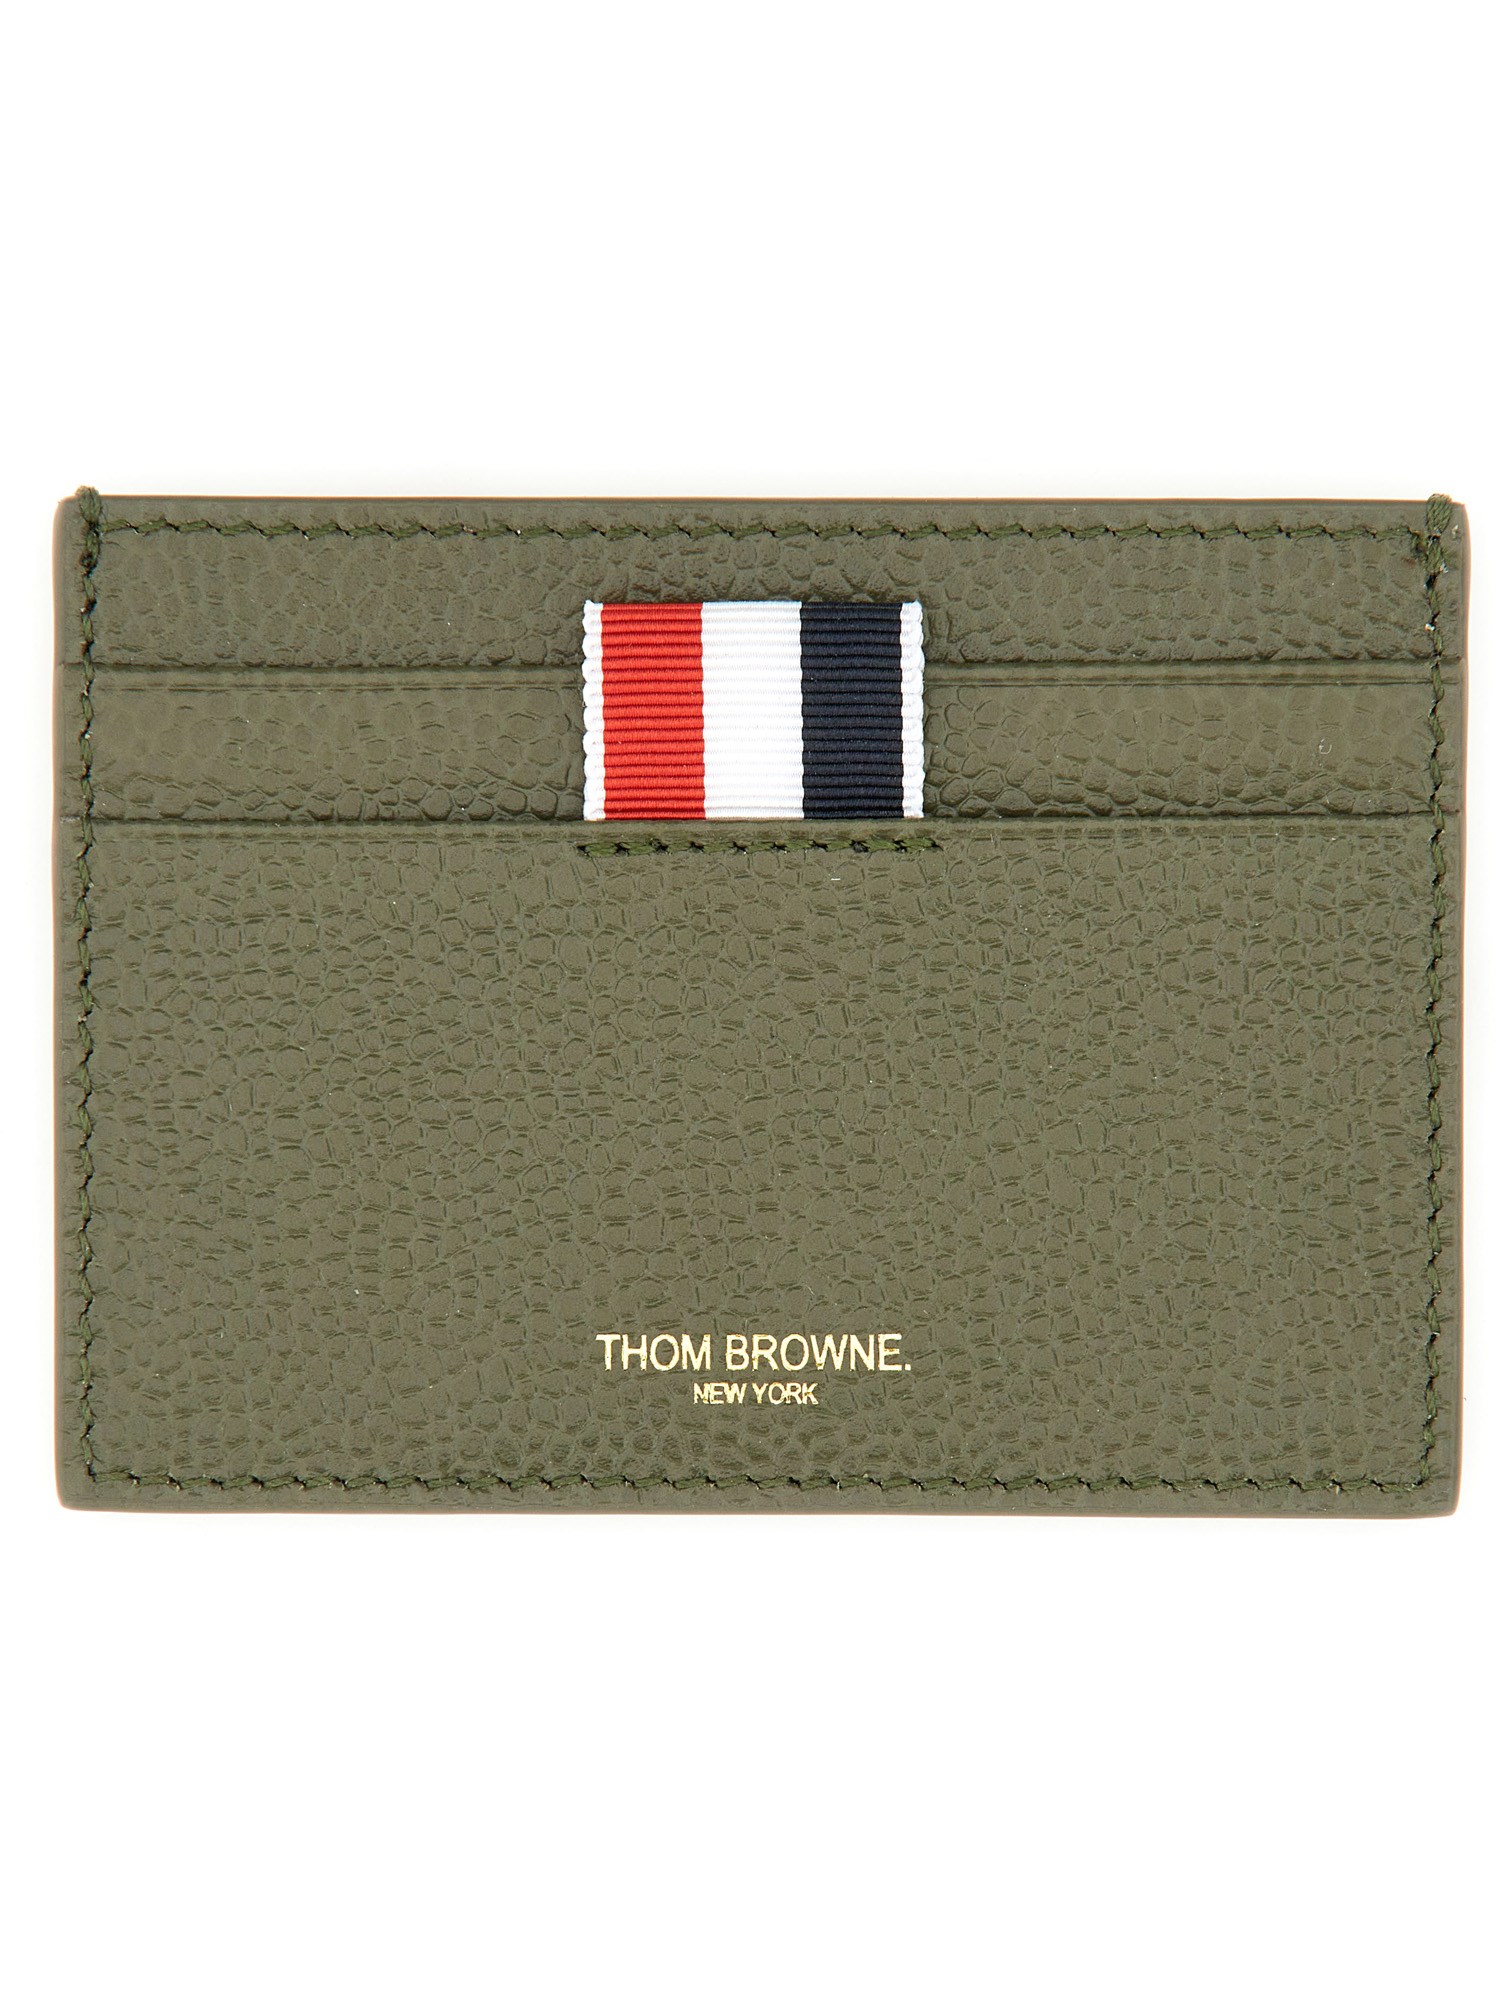 Thom Browne thom browne leather card holder